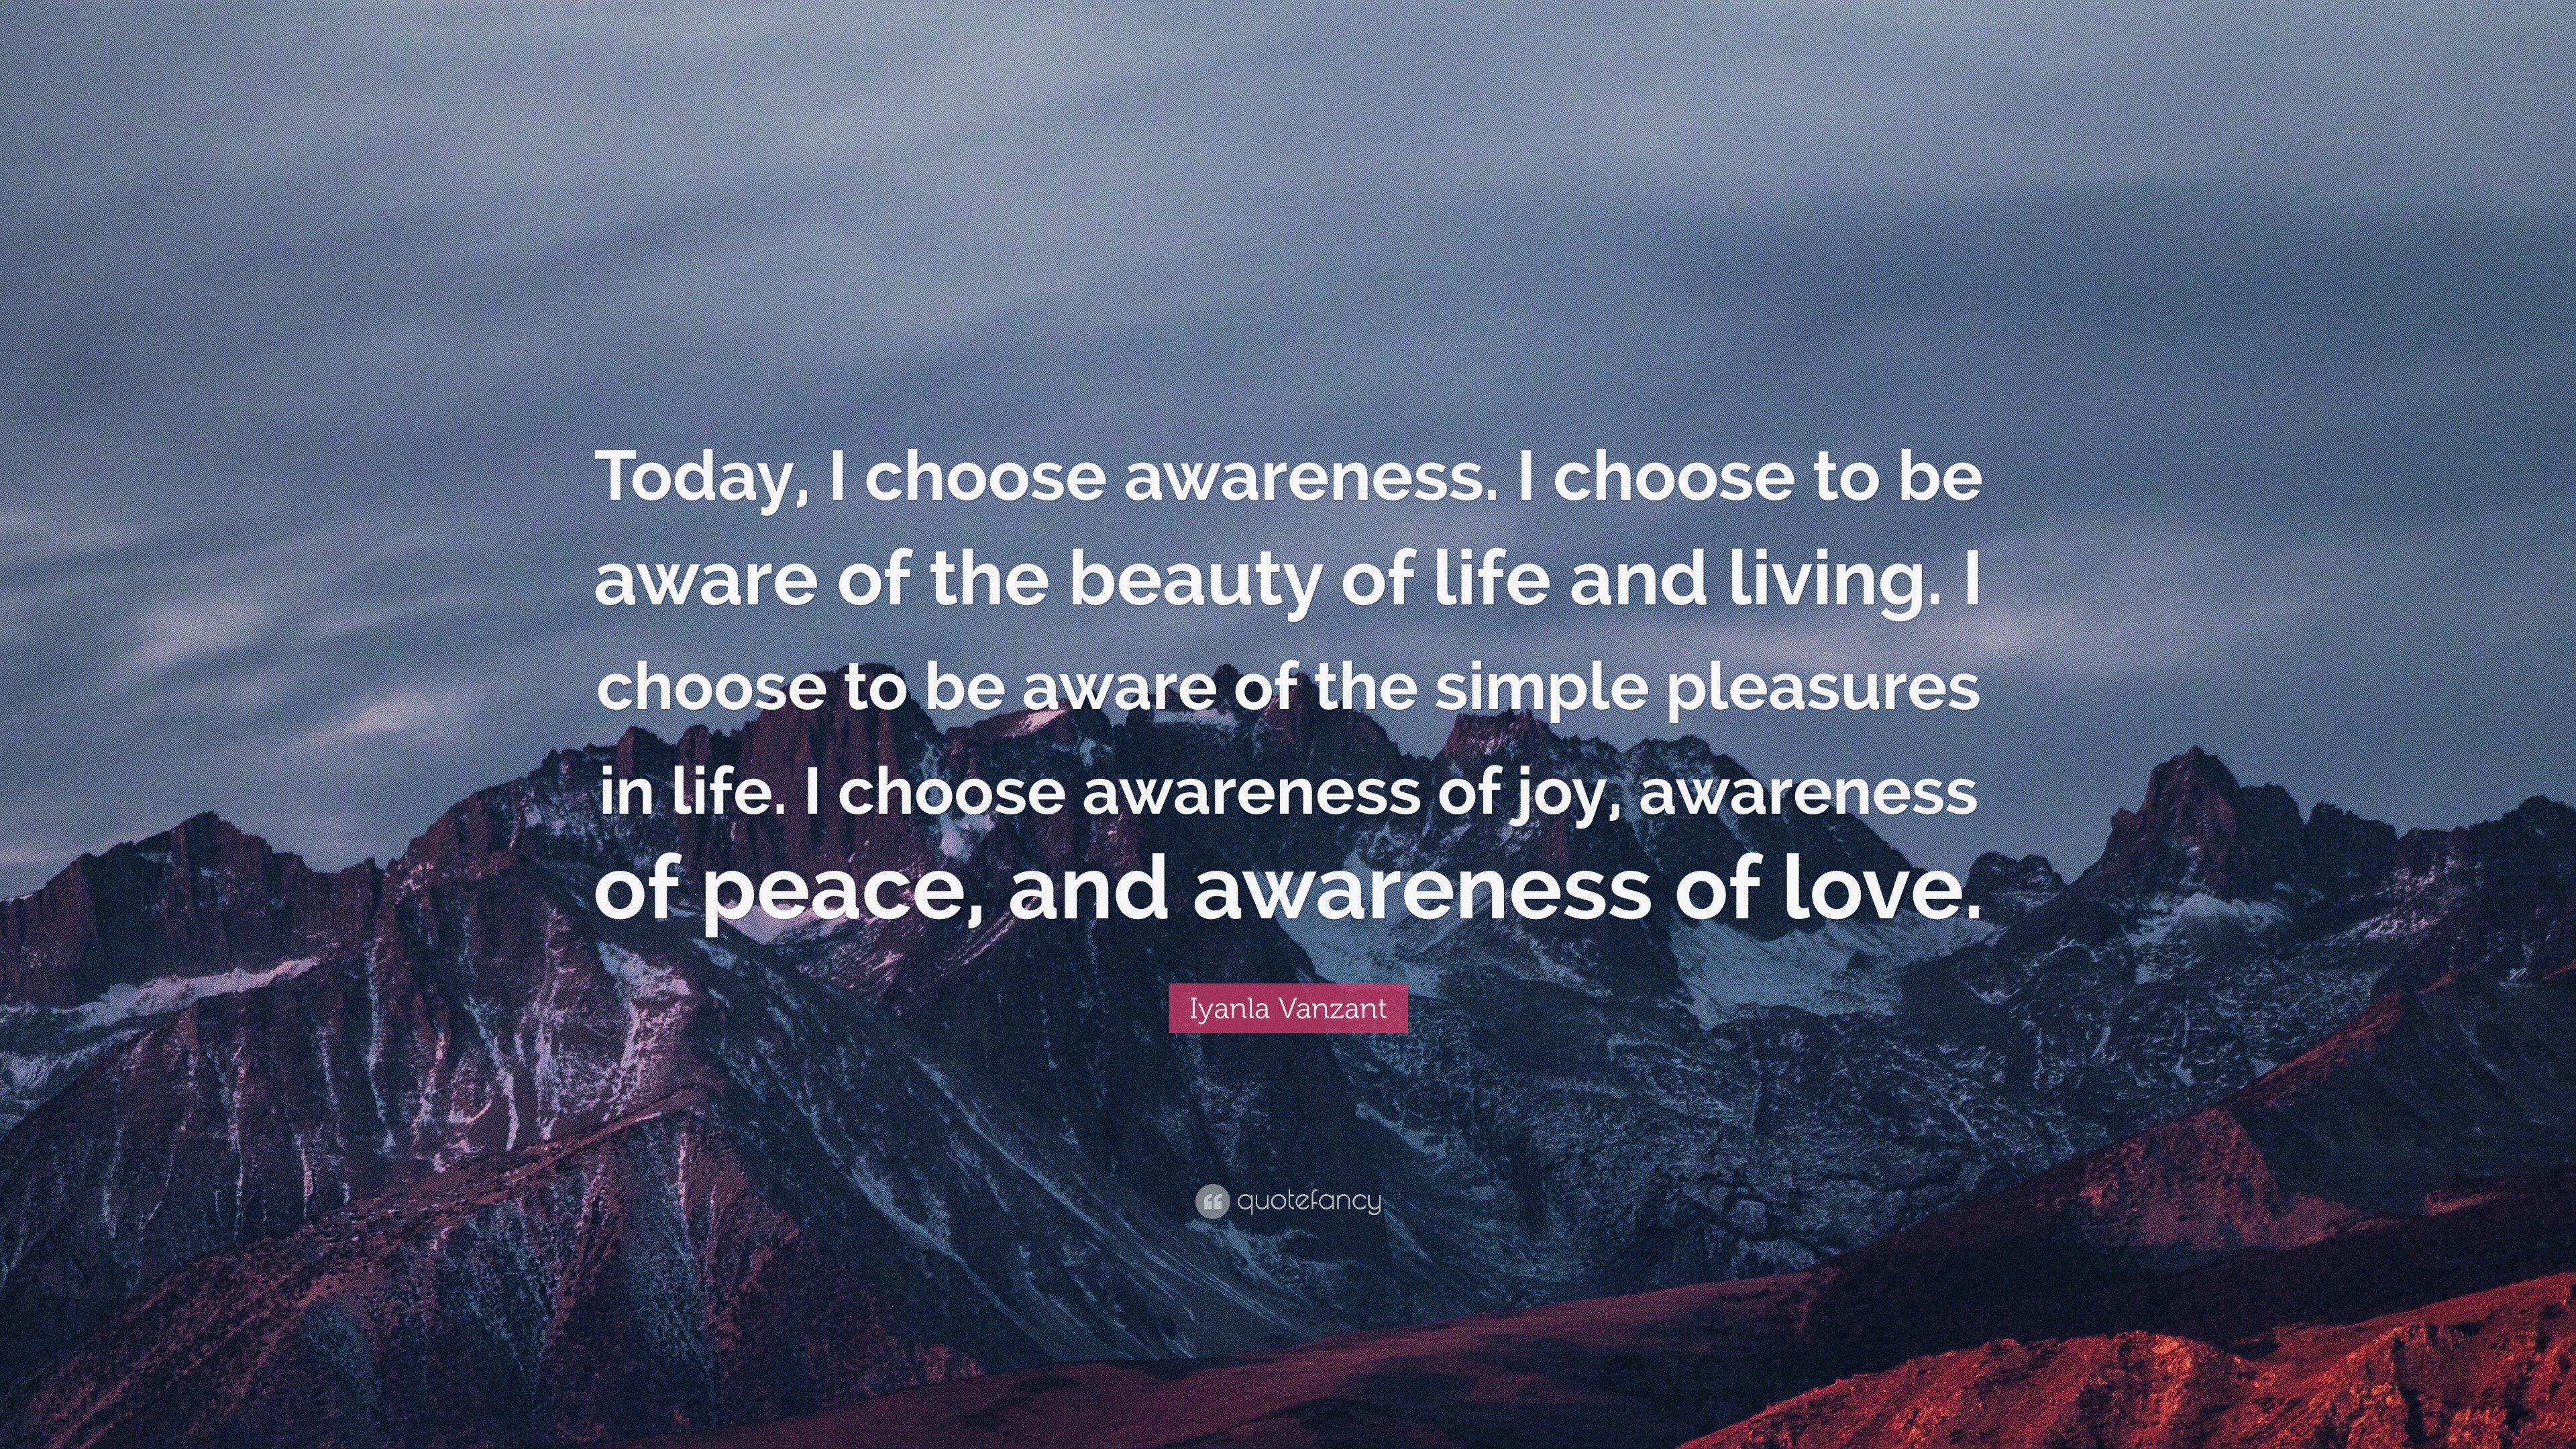 Iyanla Vanzant Quote: “Today, I choose awareness. I choose to be aware ...